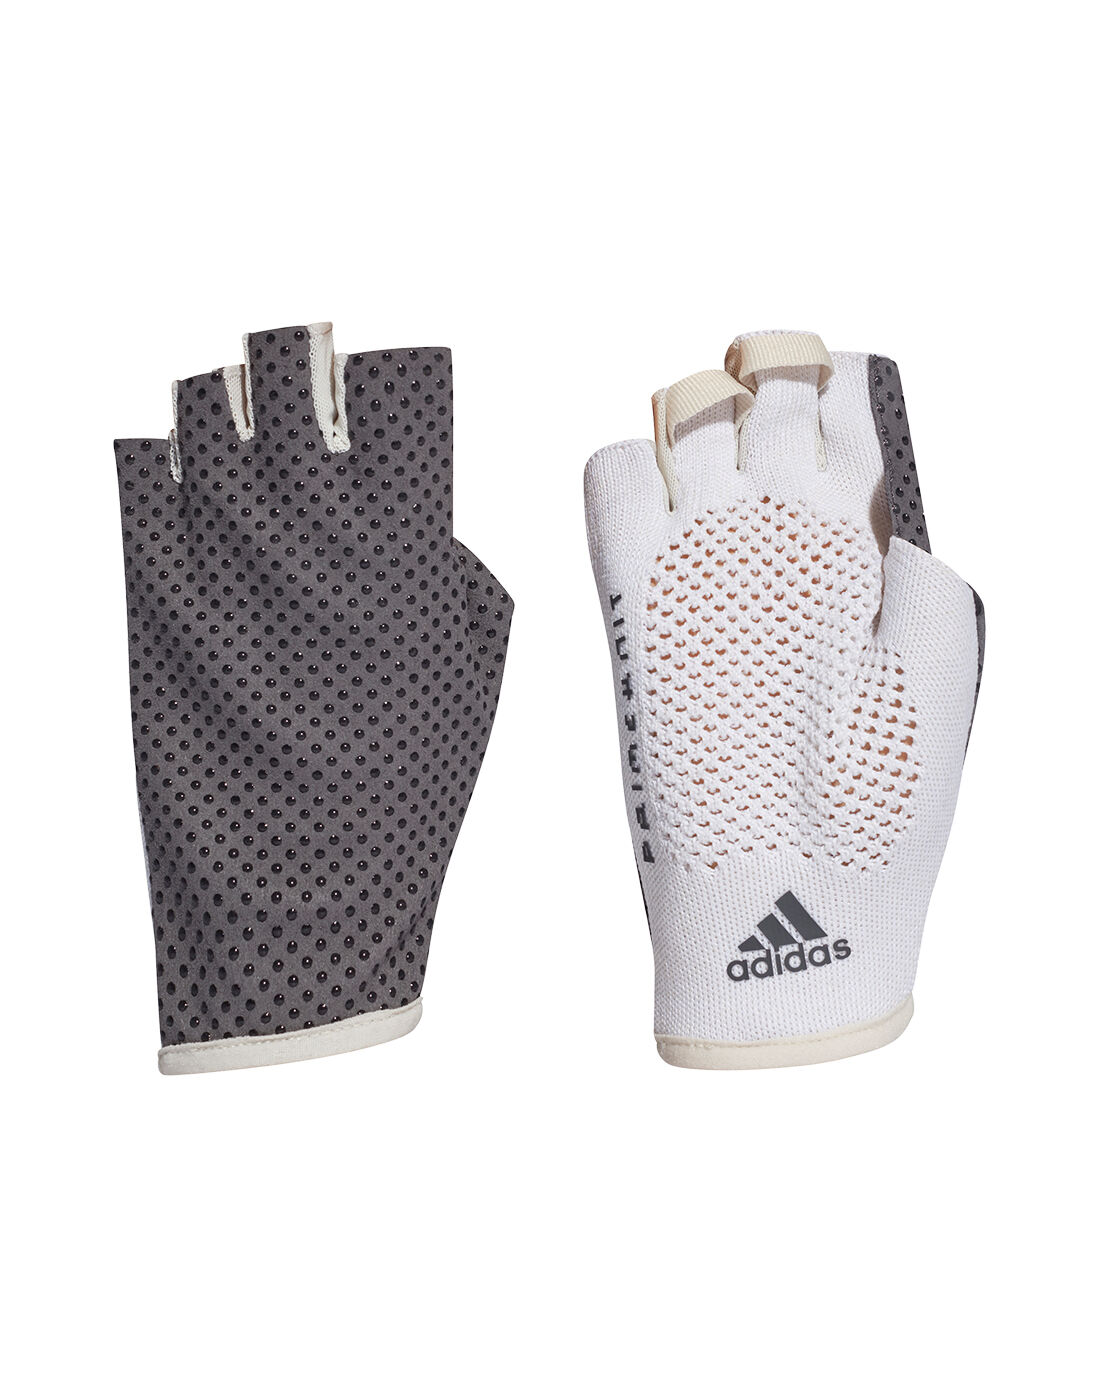 White \u0026 Grey adidas Primeknit Gloves 